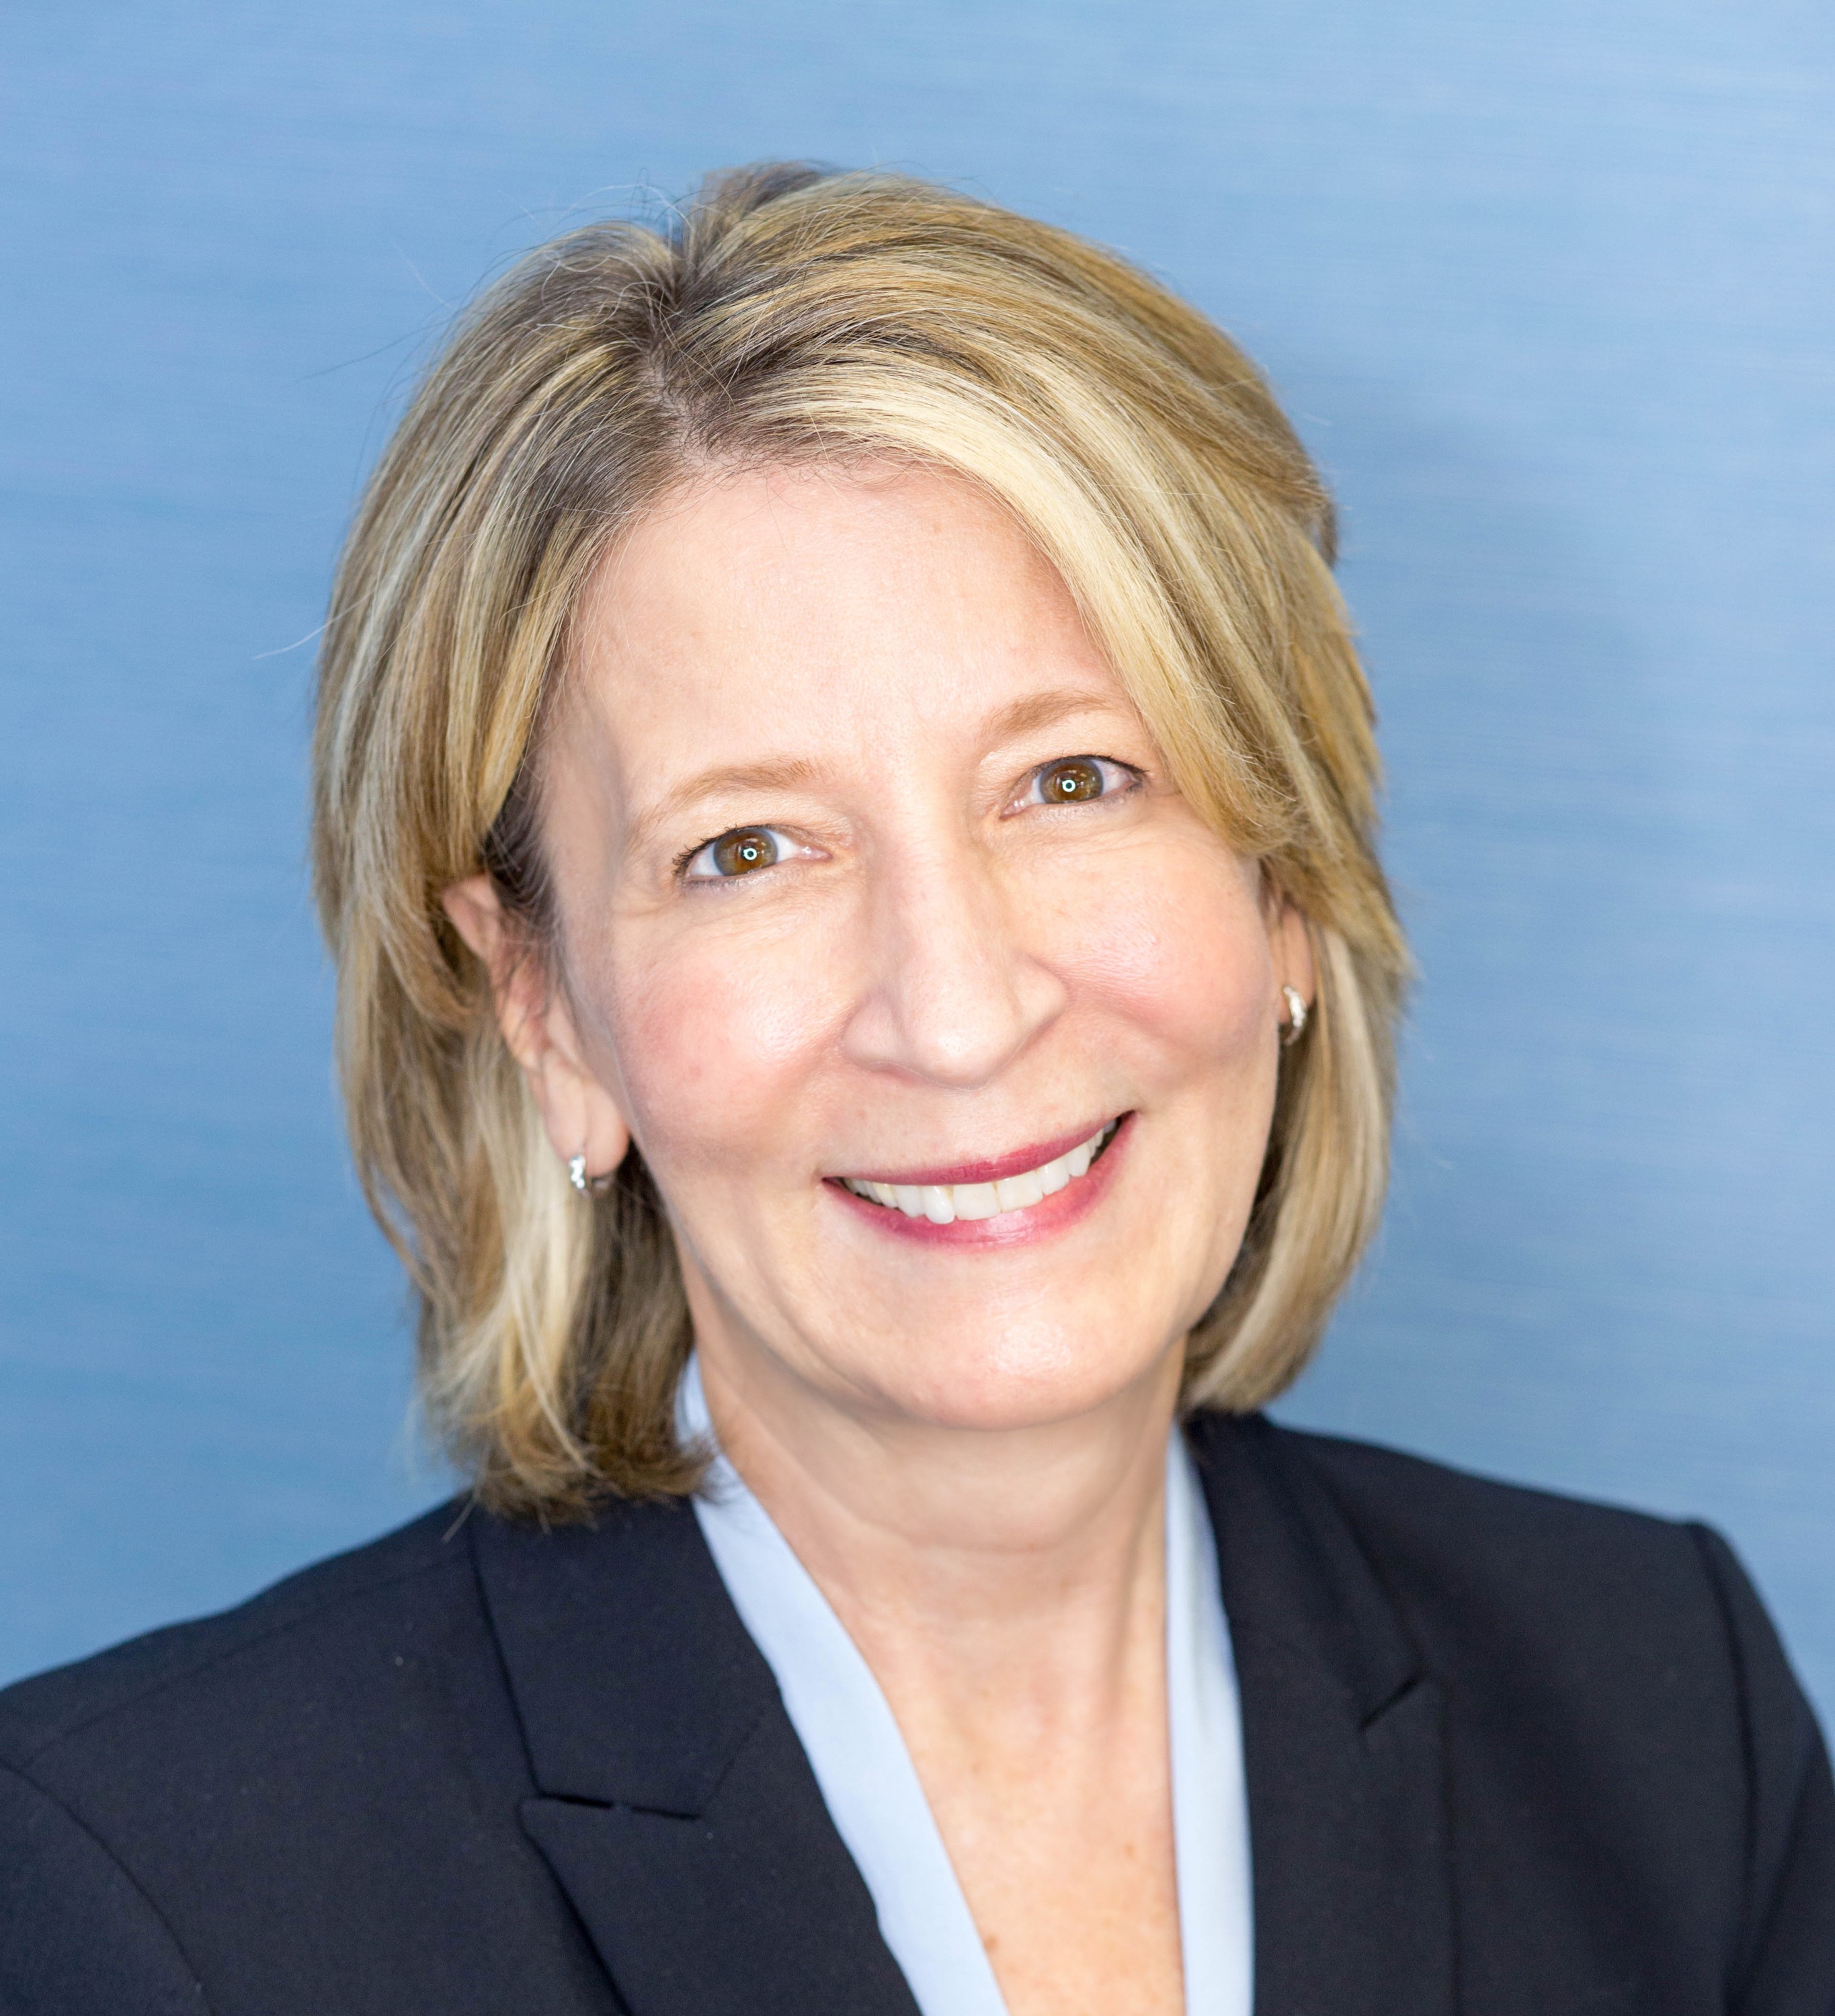 Kathy S. Bower's Profile Image